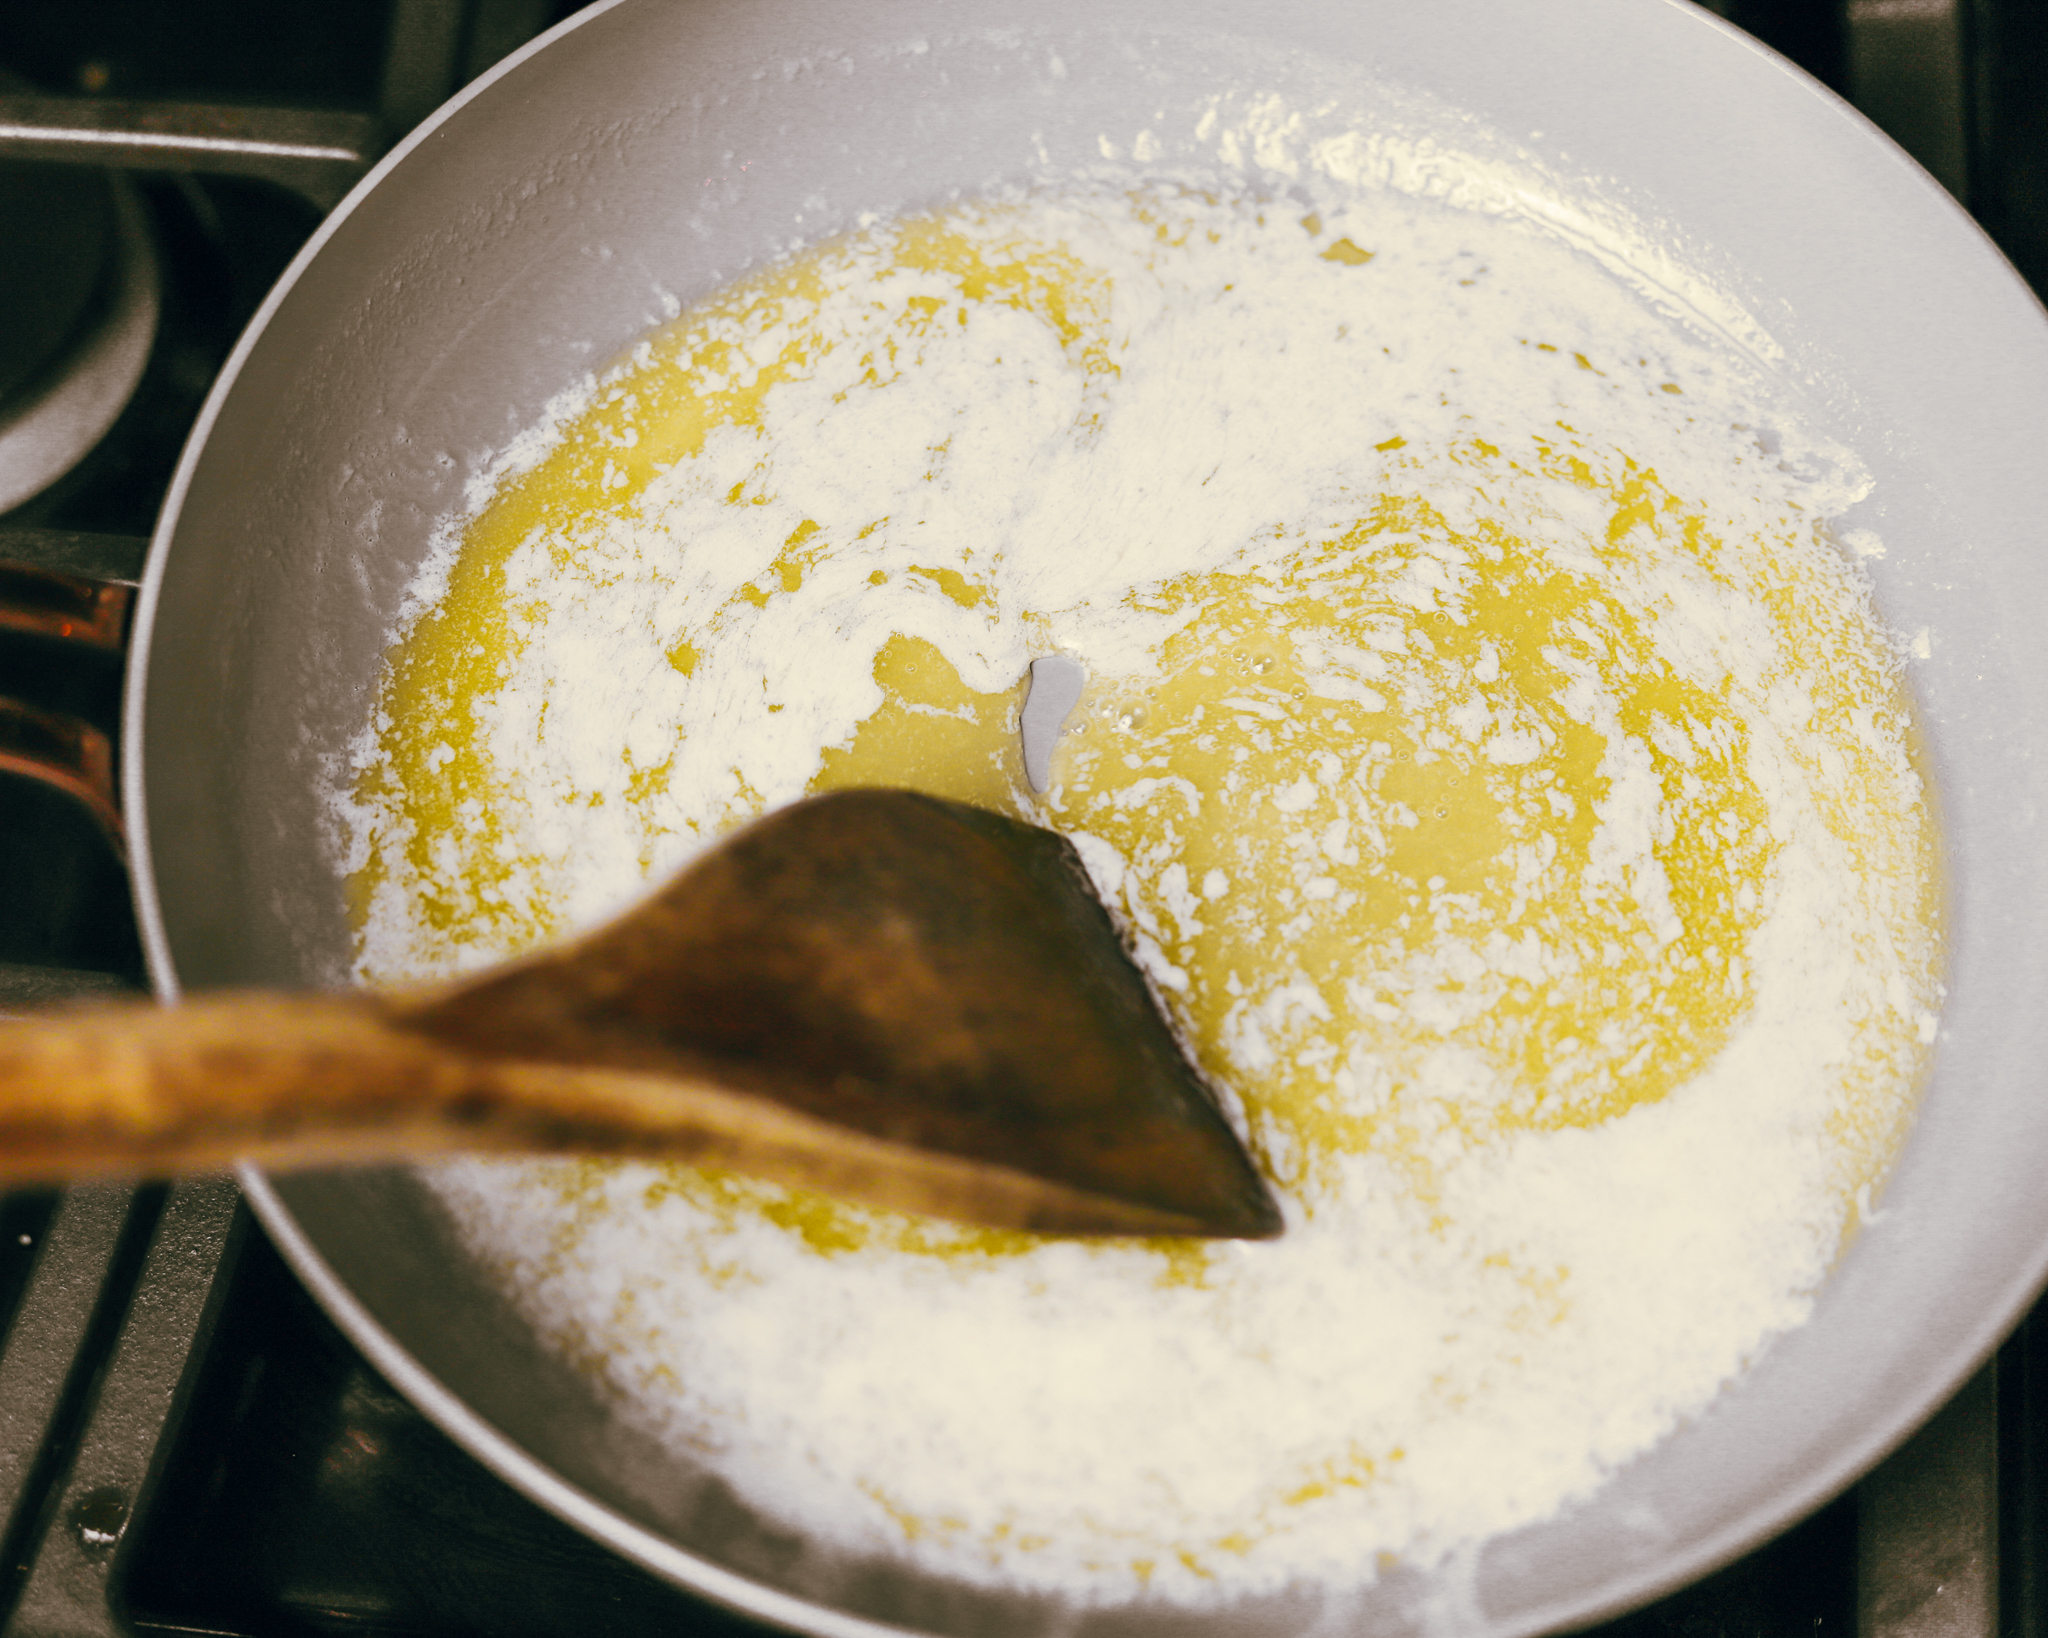 wood spoon stirs foaming butter as it heats up in a pan